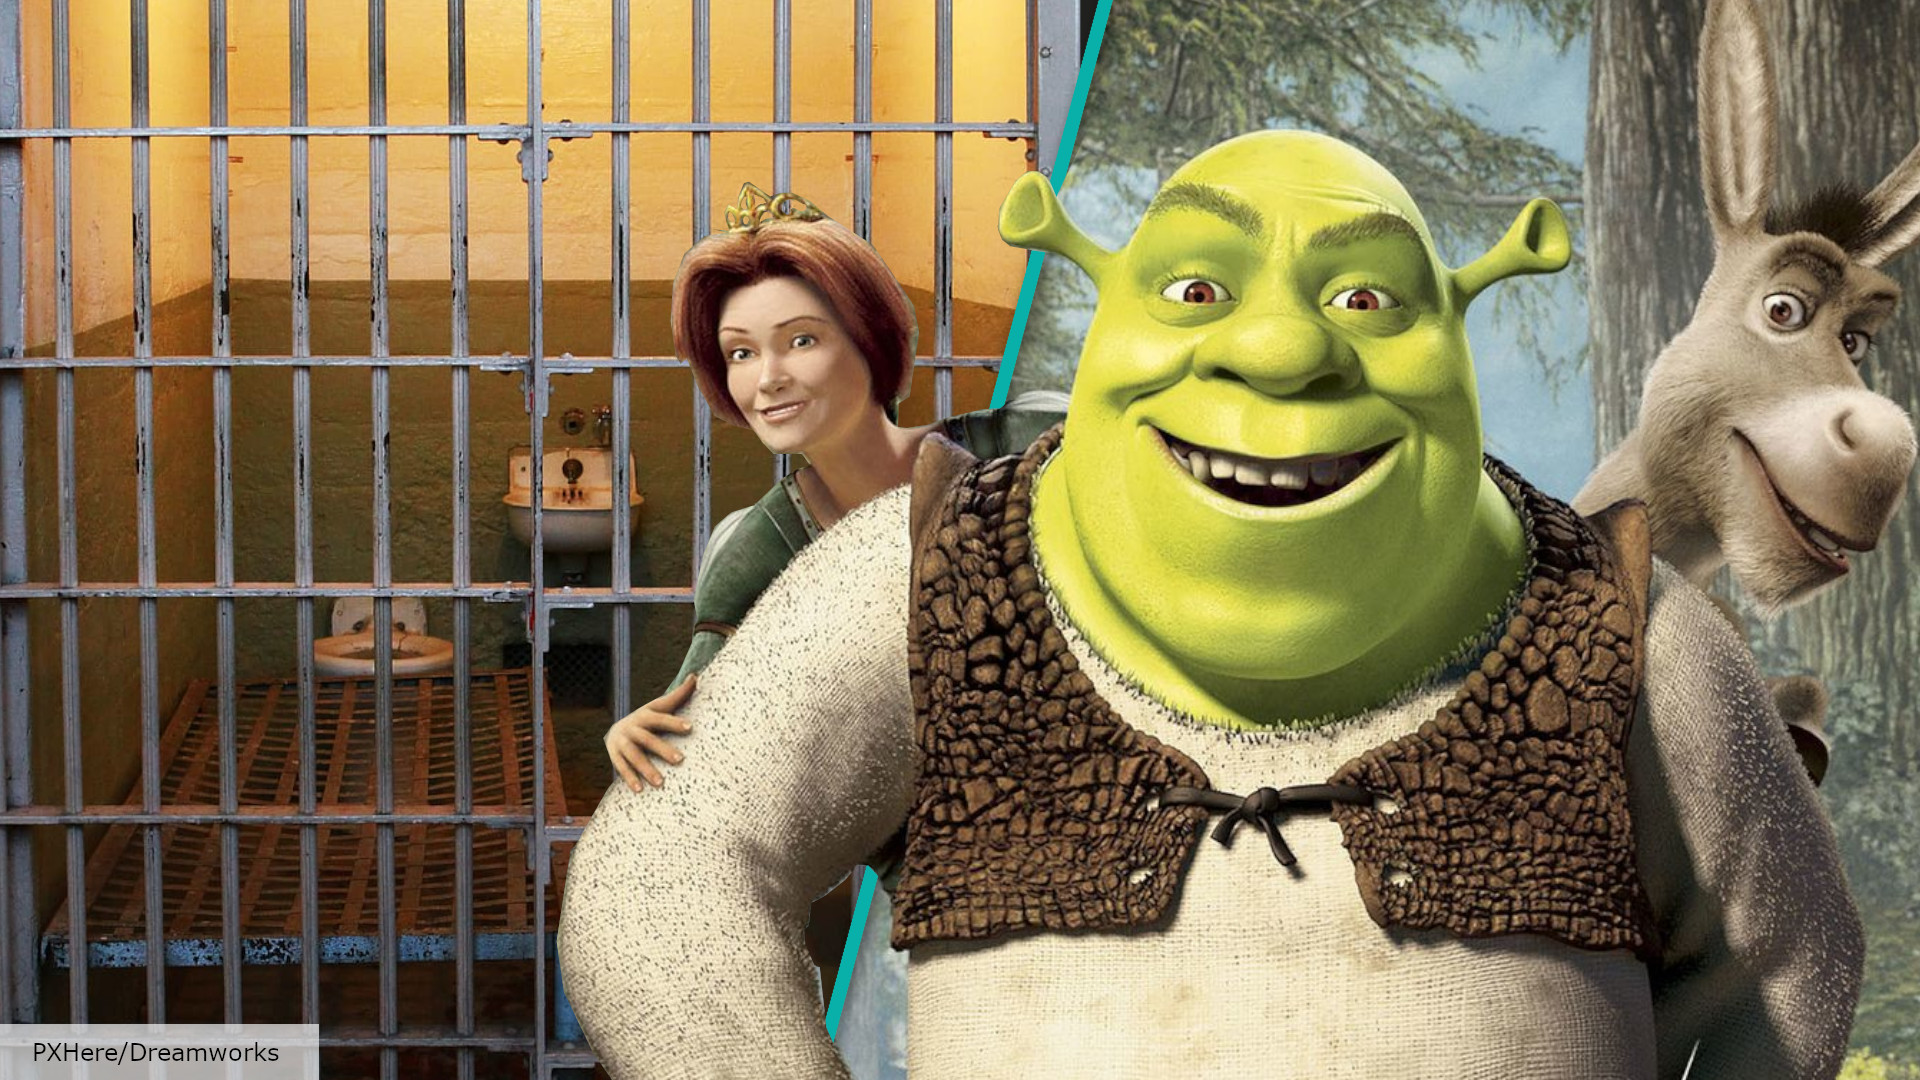 When DreamWorks punished animators by making them work on 'Shrek